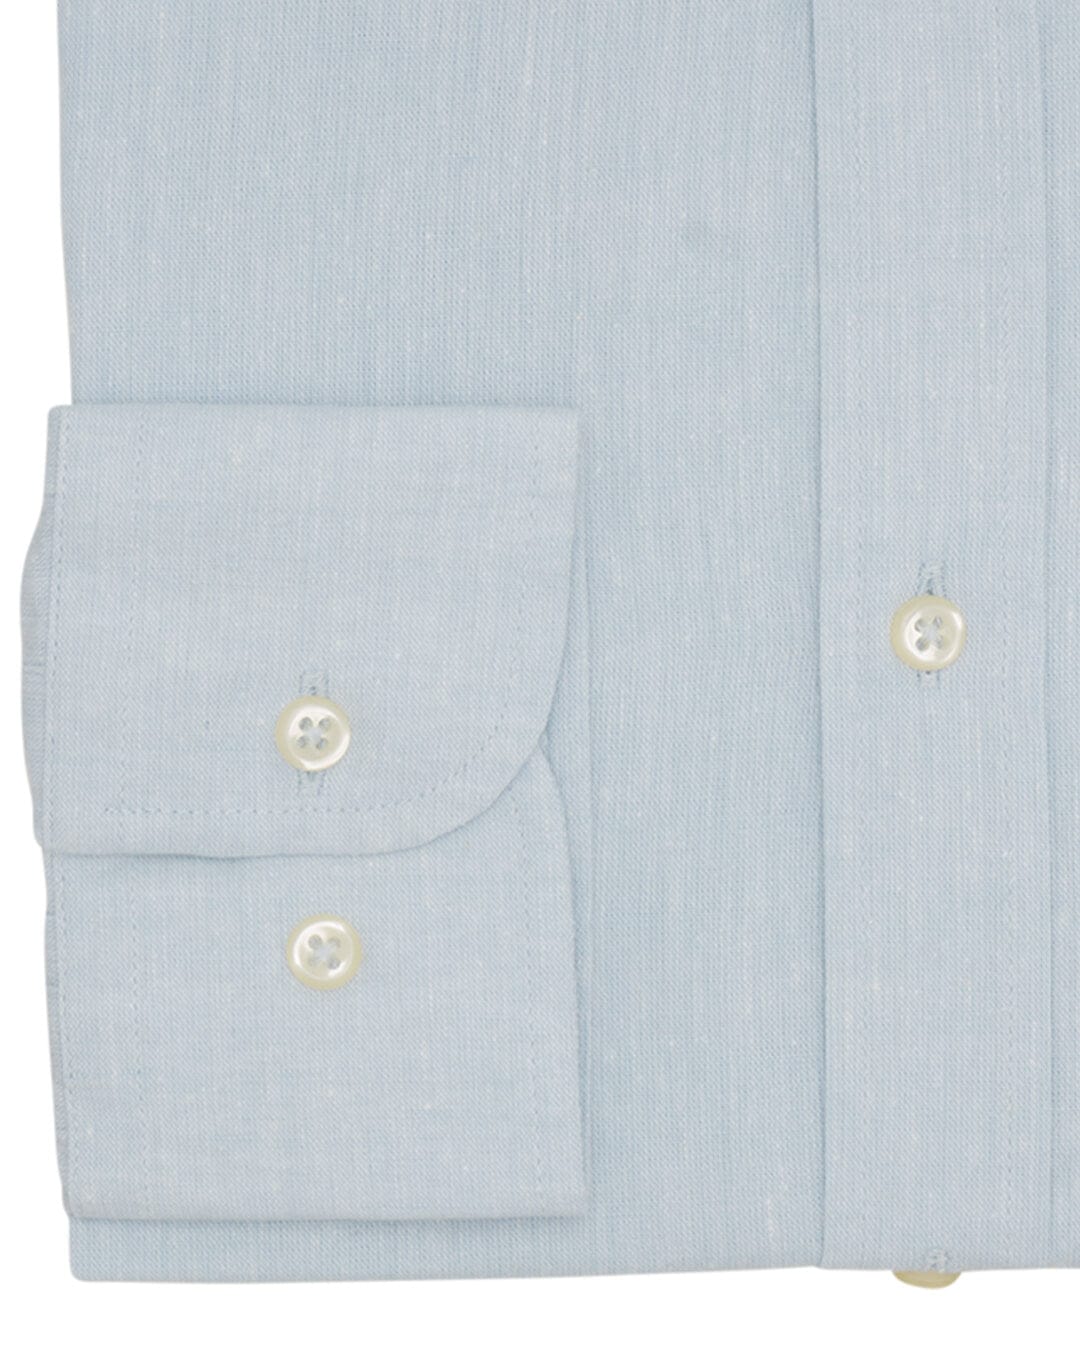 Gagliardi Shirts Aqua Blue Plain SlimFit Long Sleeve Button-Down Collar Linen Shirt